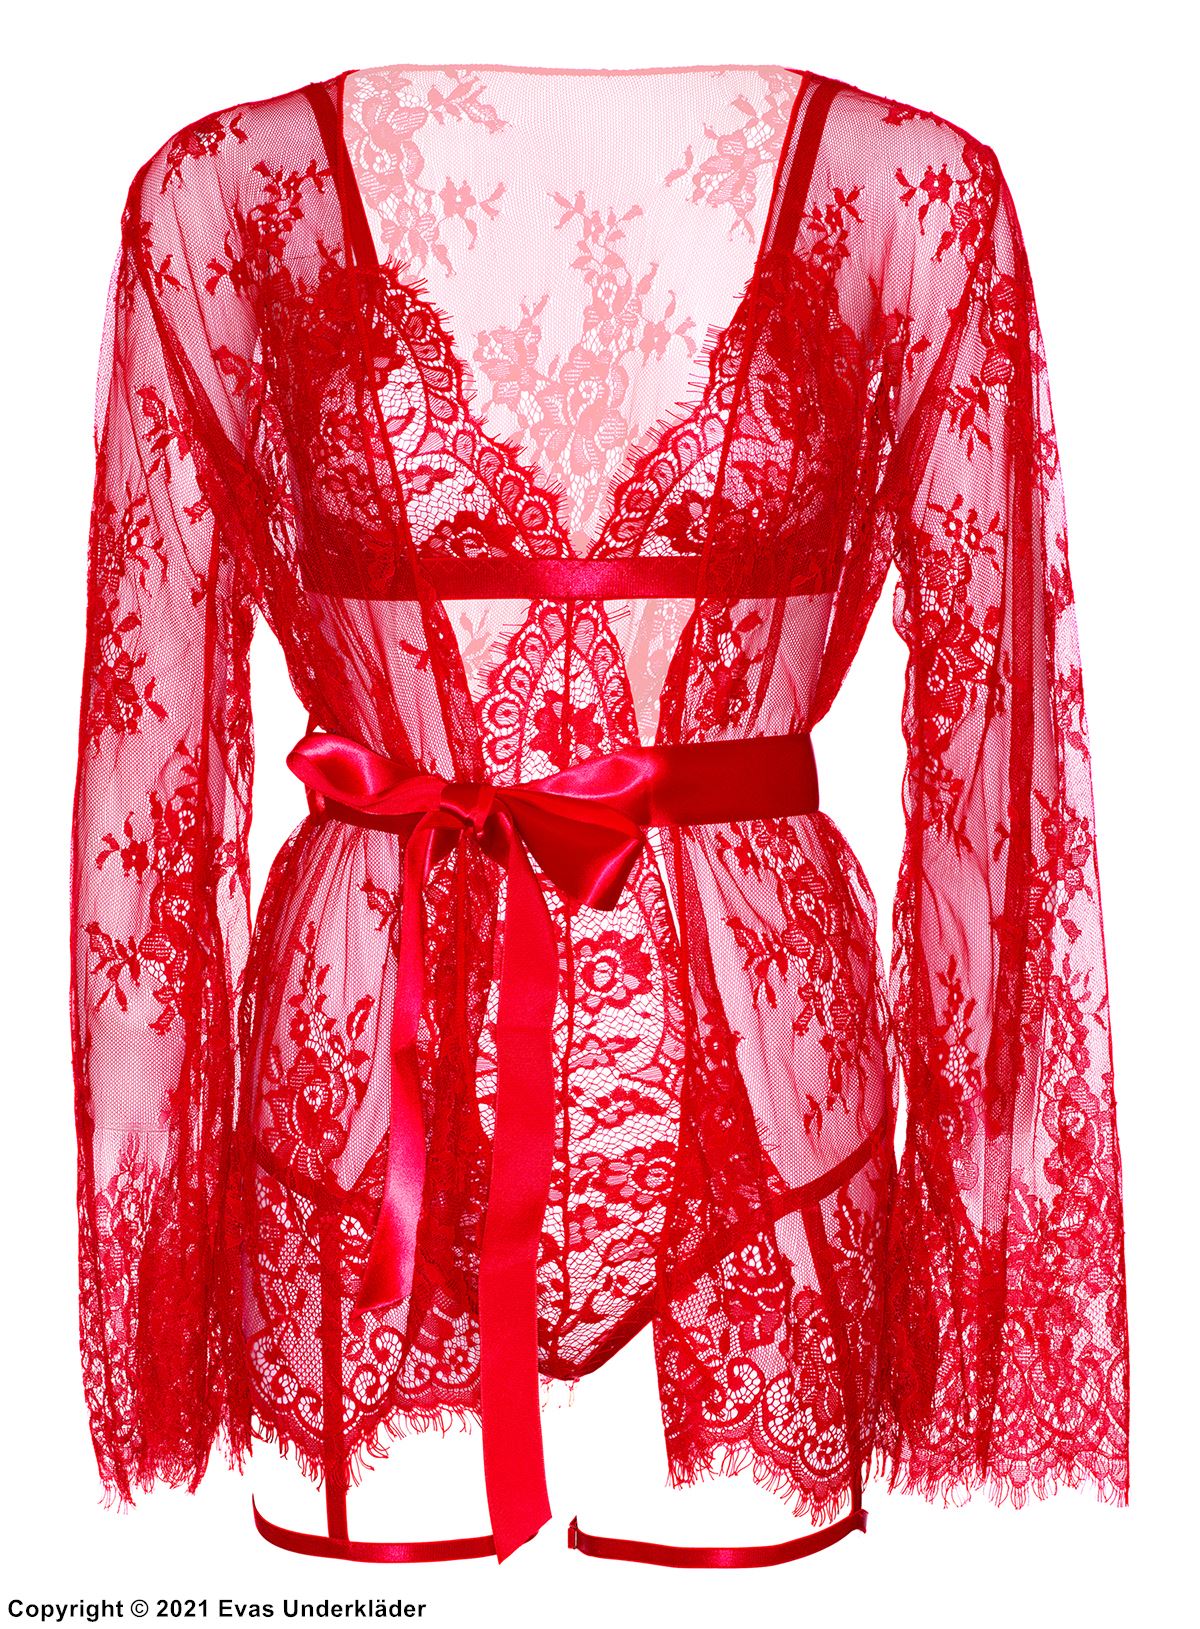 Seductive lingerie set, eyelash lace, built-in garter belt strap, flowers